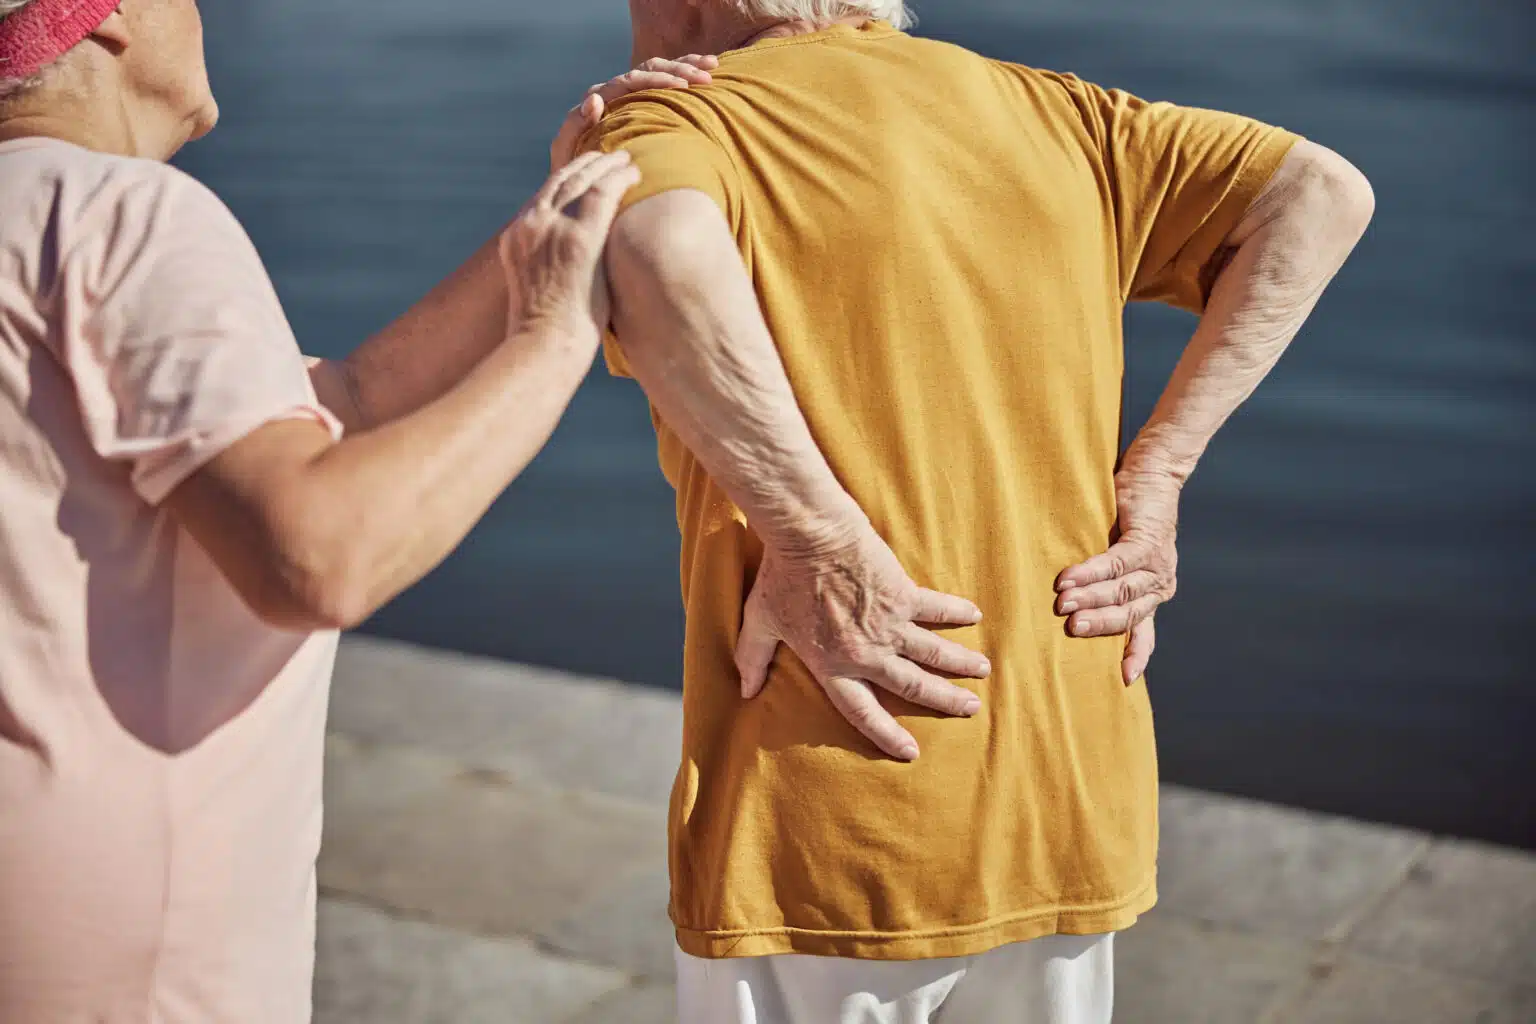 elderly man with chronic back pain